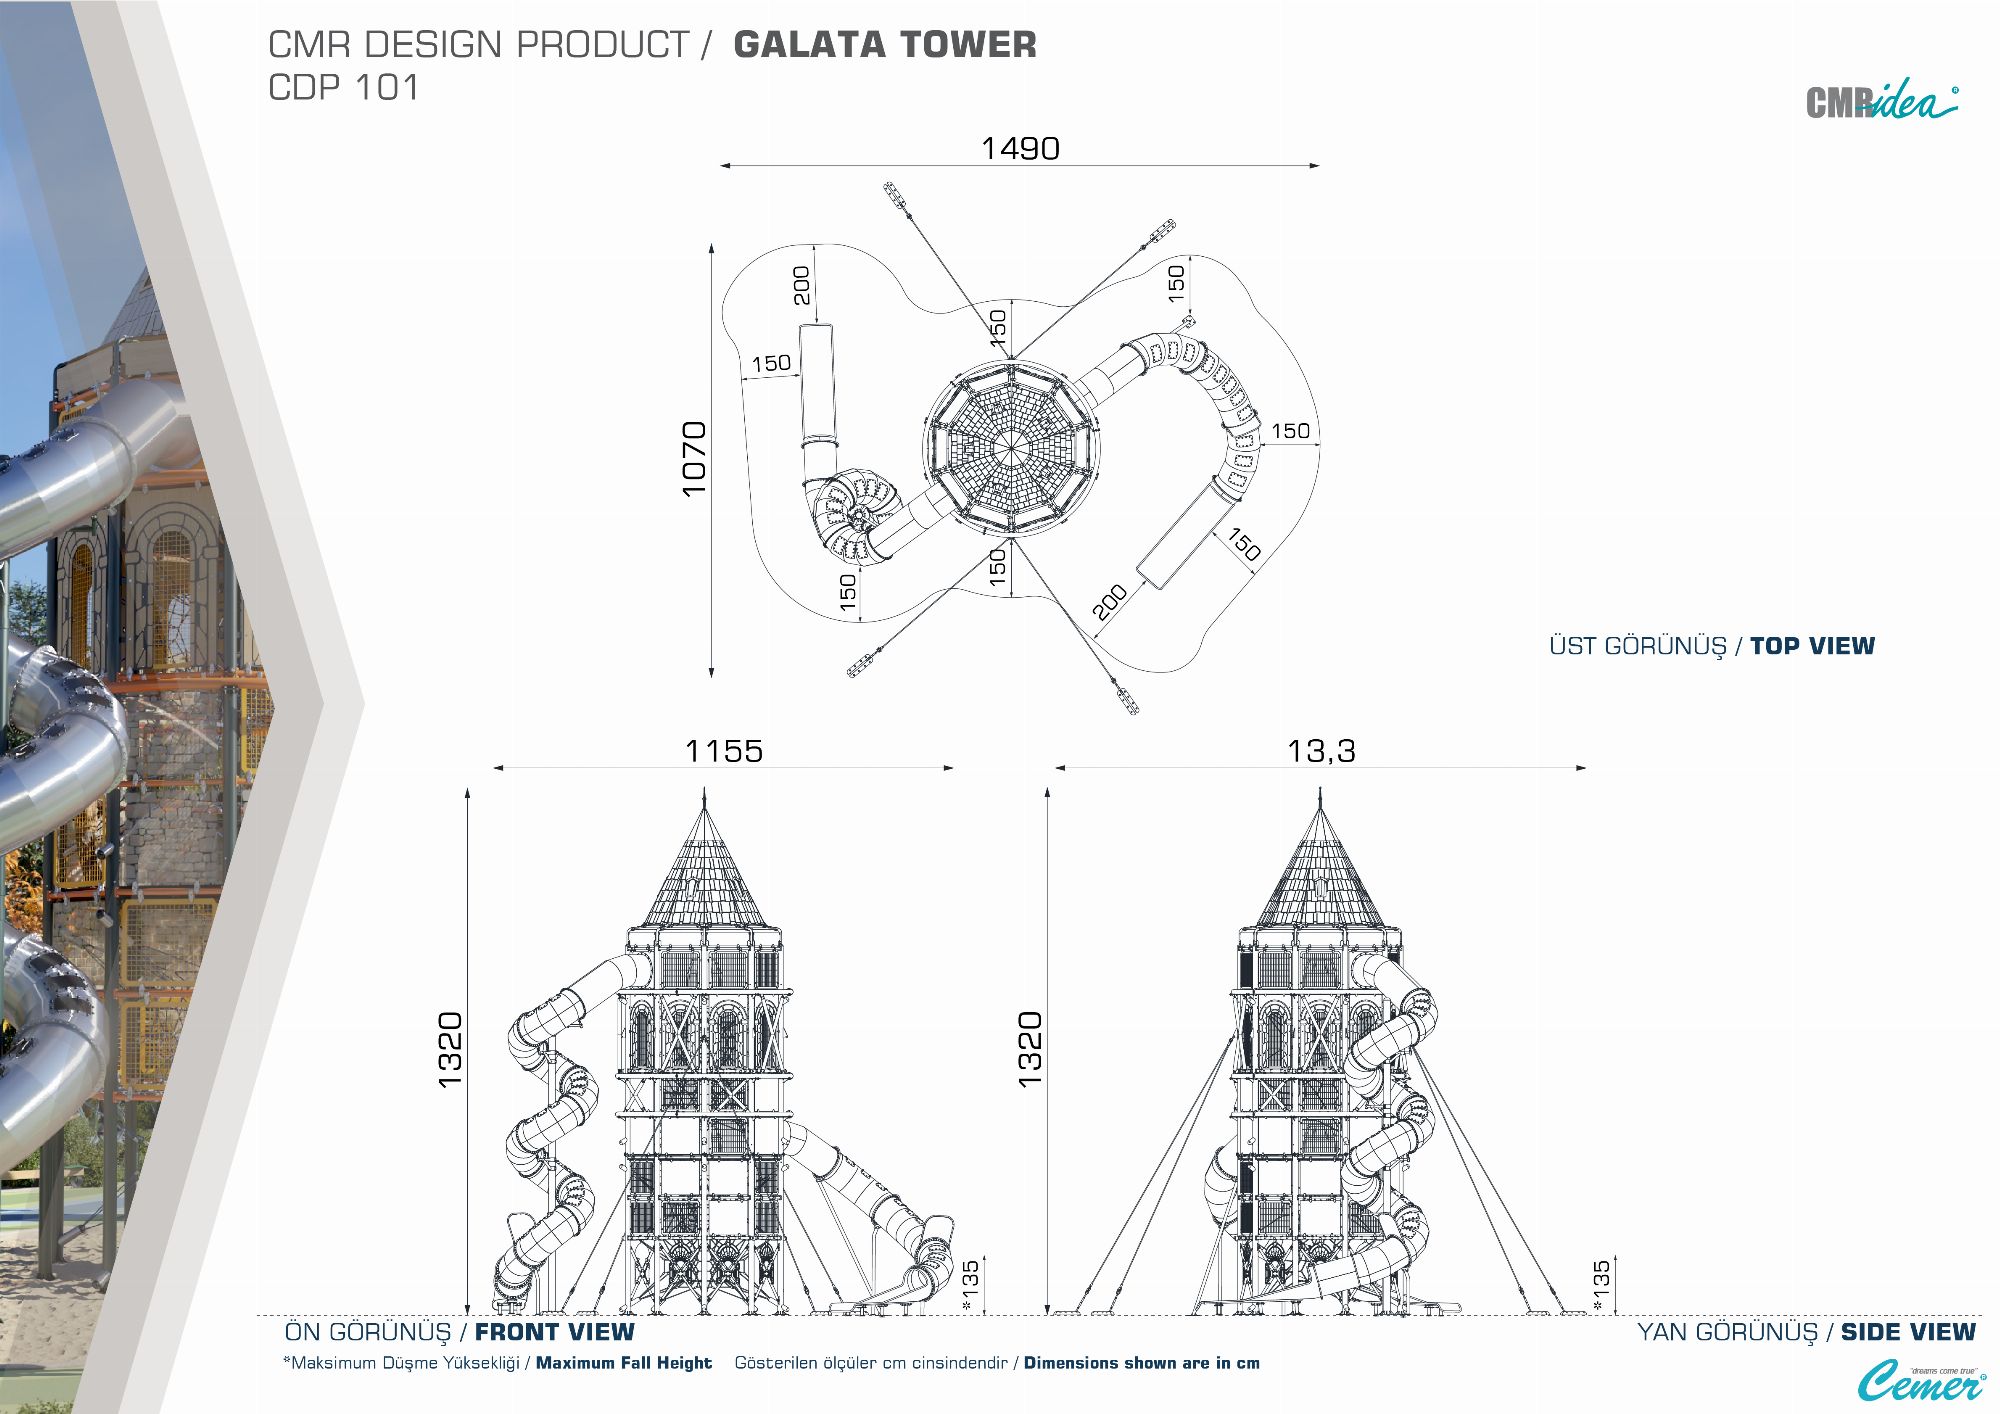 cdp-101-tse-cdp-101---galata-tower-3.jpg